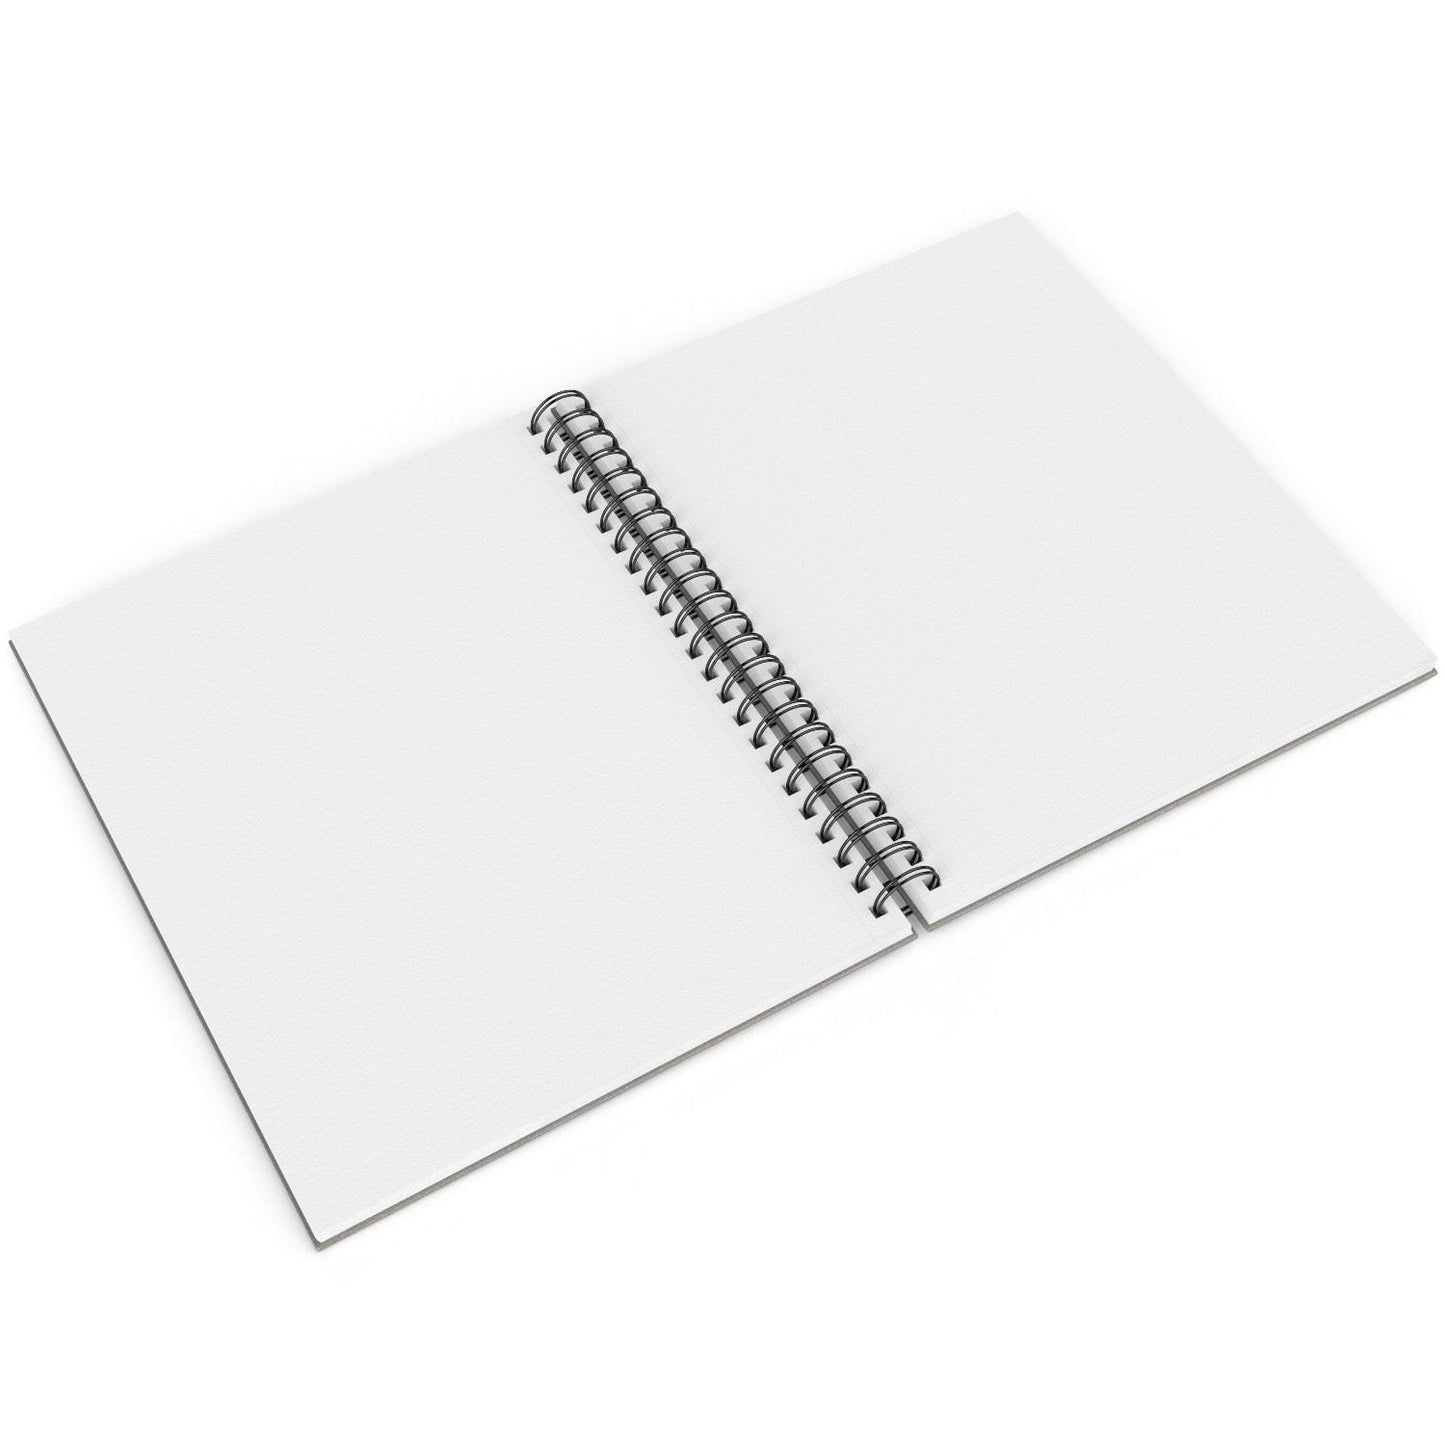 Cabreche Cute Sketchbook Top Spiral Bound Sketch Pad, 9 x 12 inch